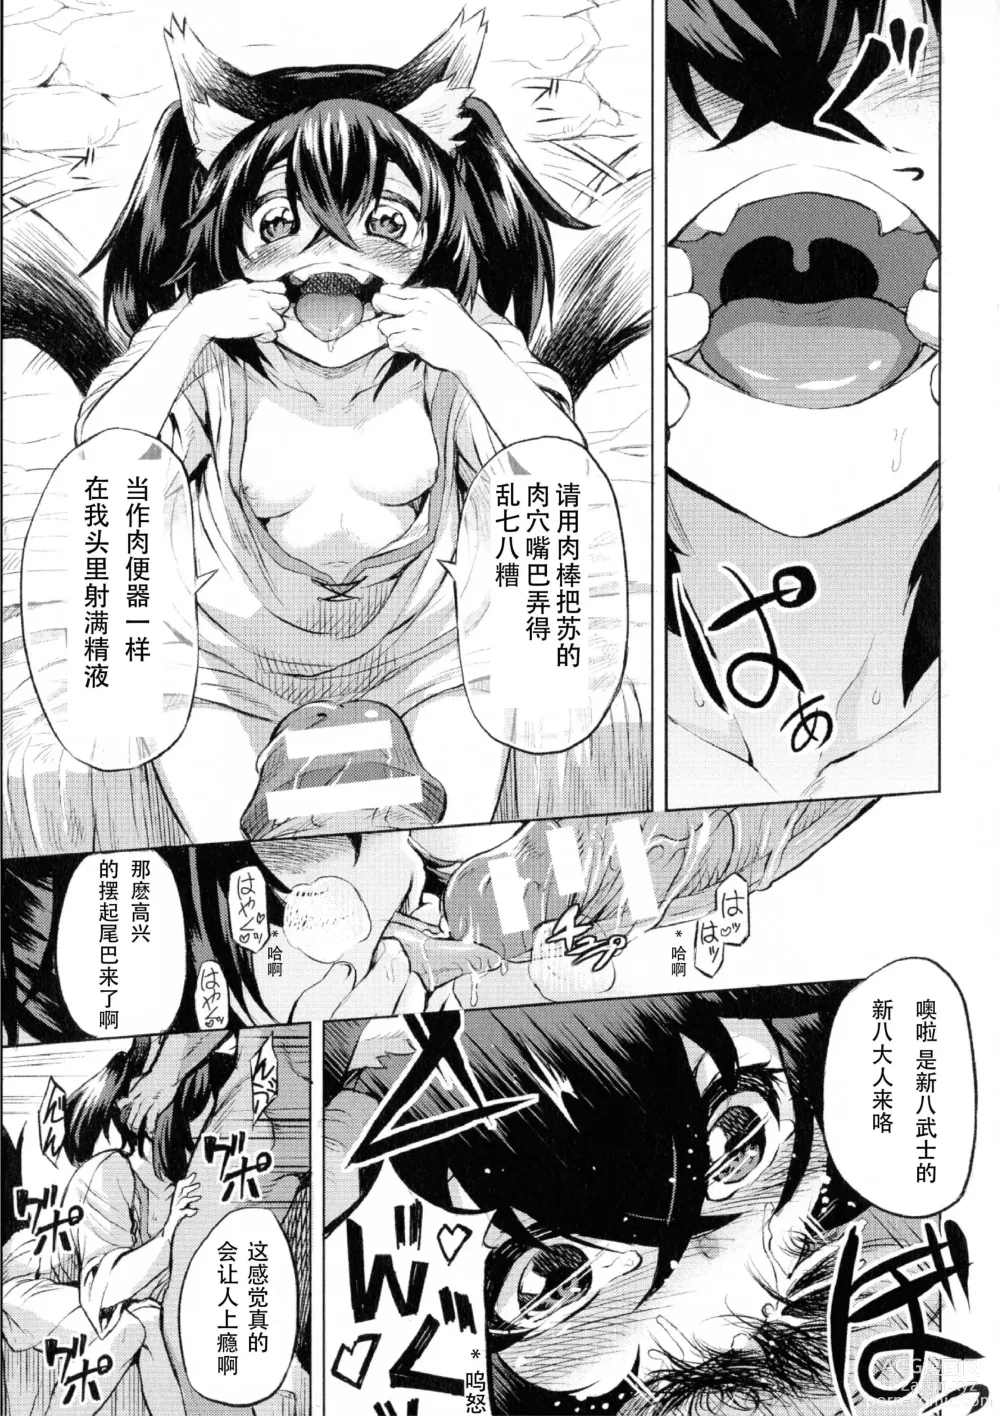 Page 172 of manga Ishu Kitan